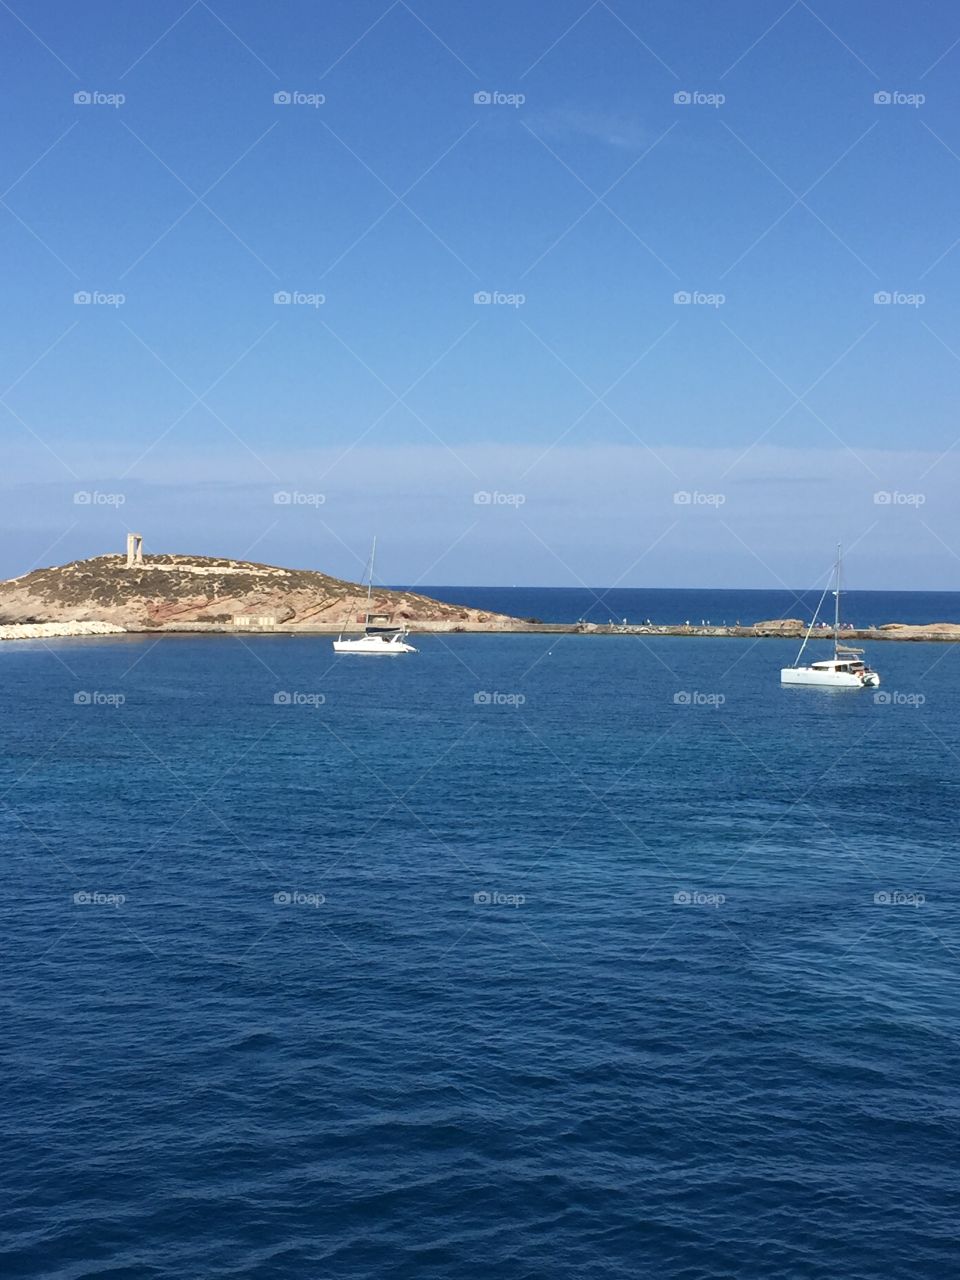 a glimpse of the island, naxos. 